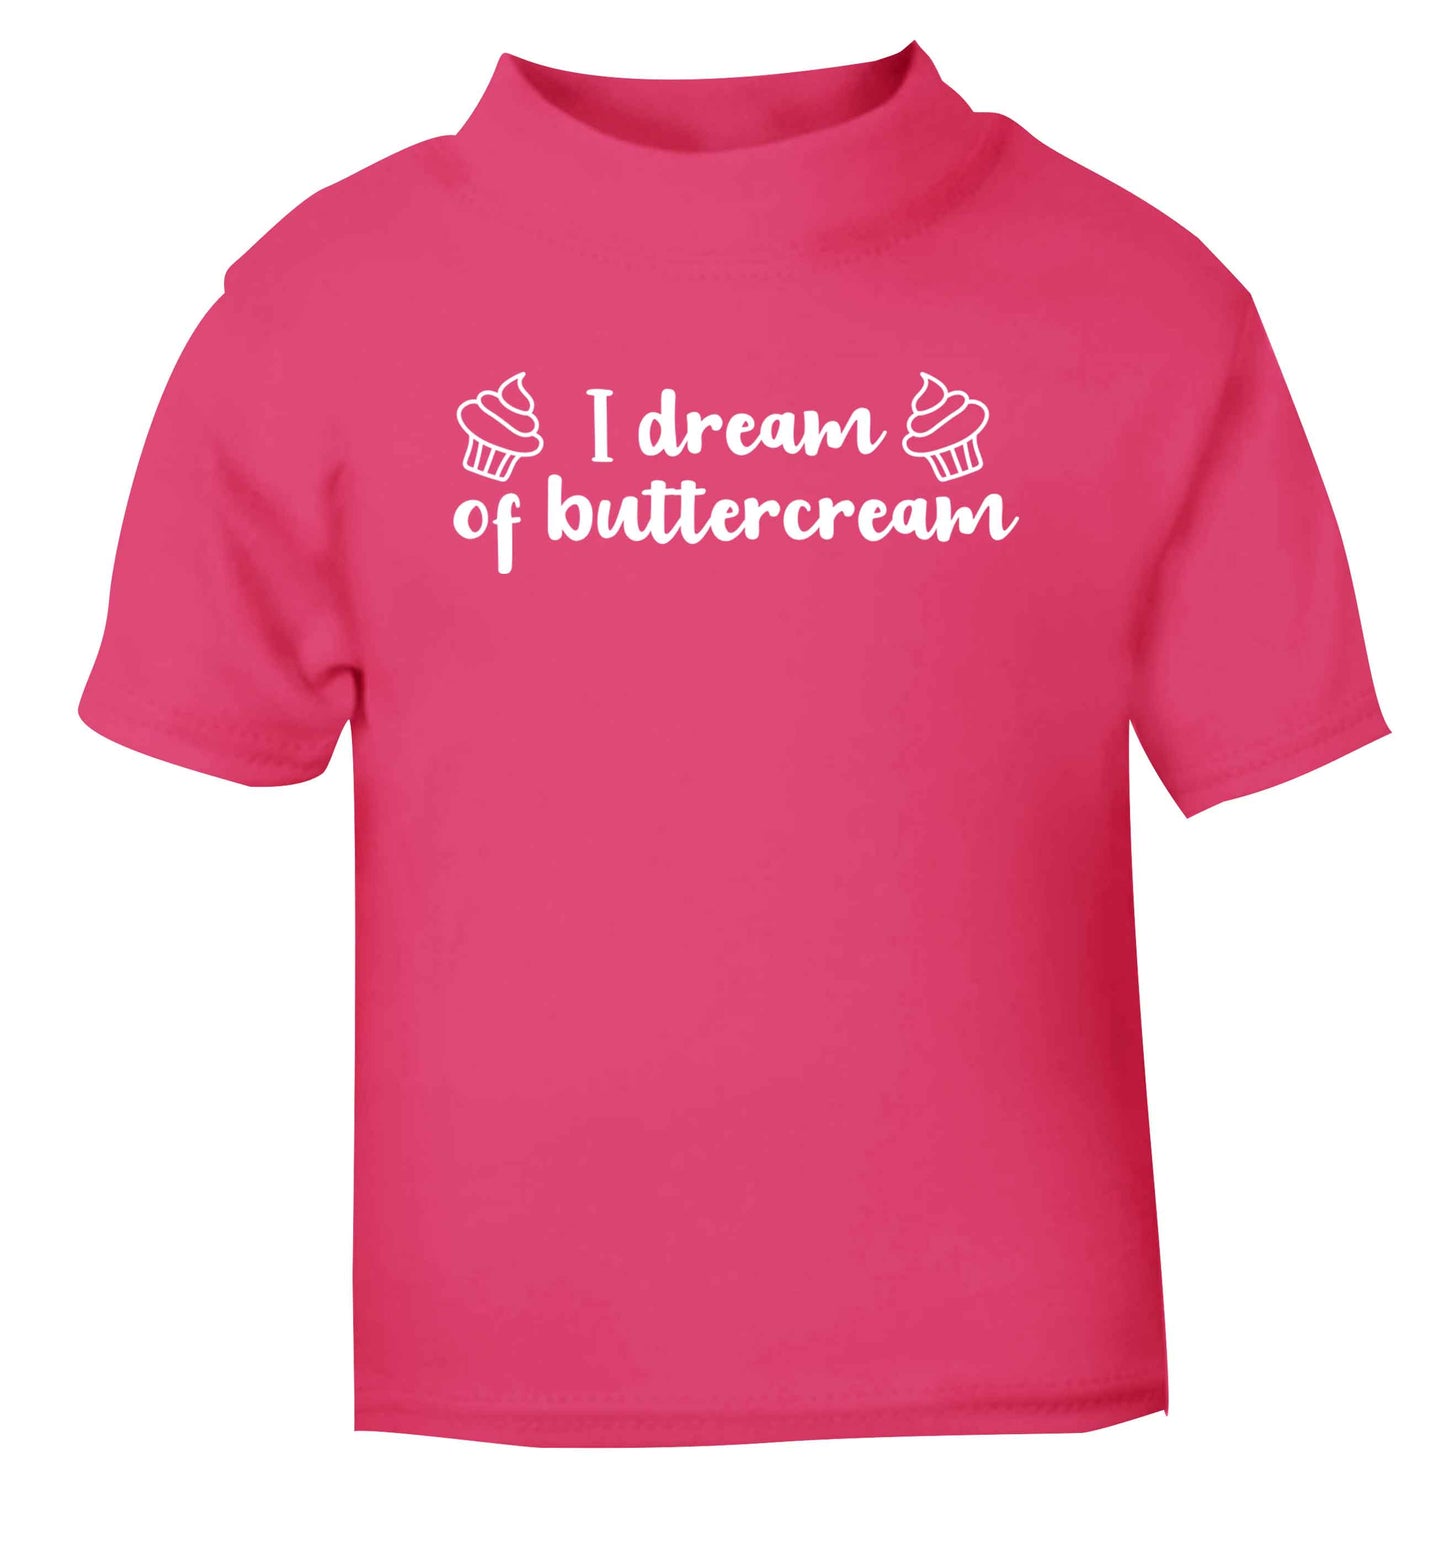 I dream of buttercream pink Baby Toddler Tshirt 2 Years